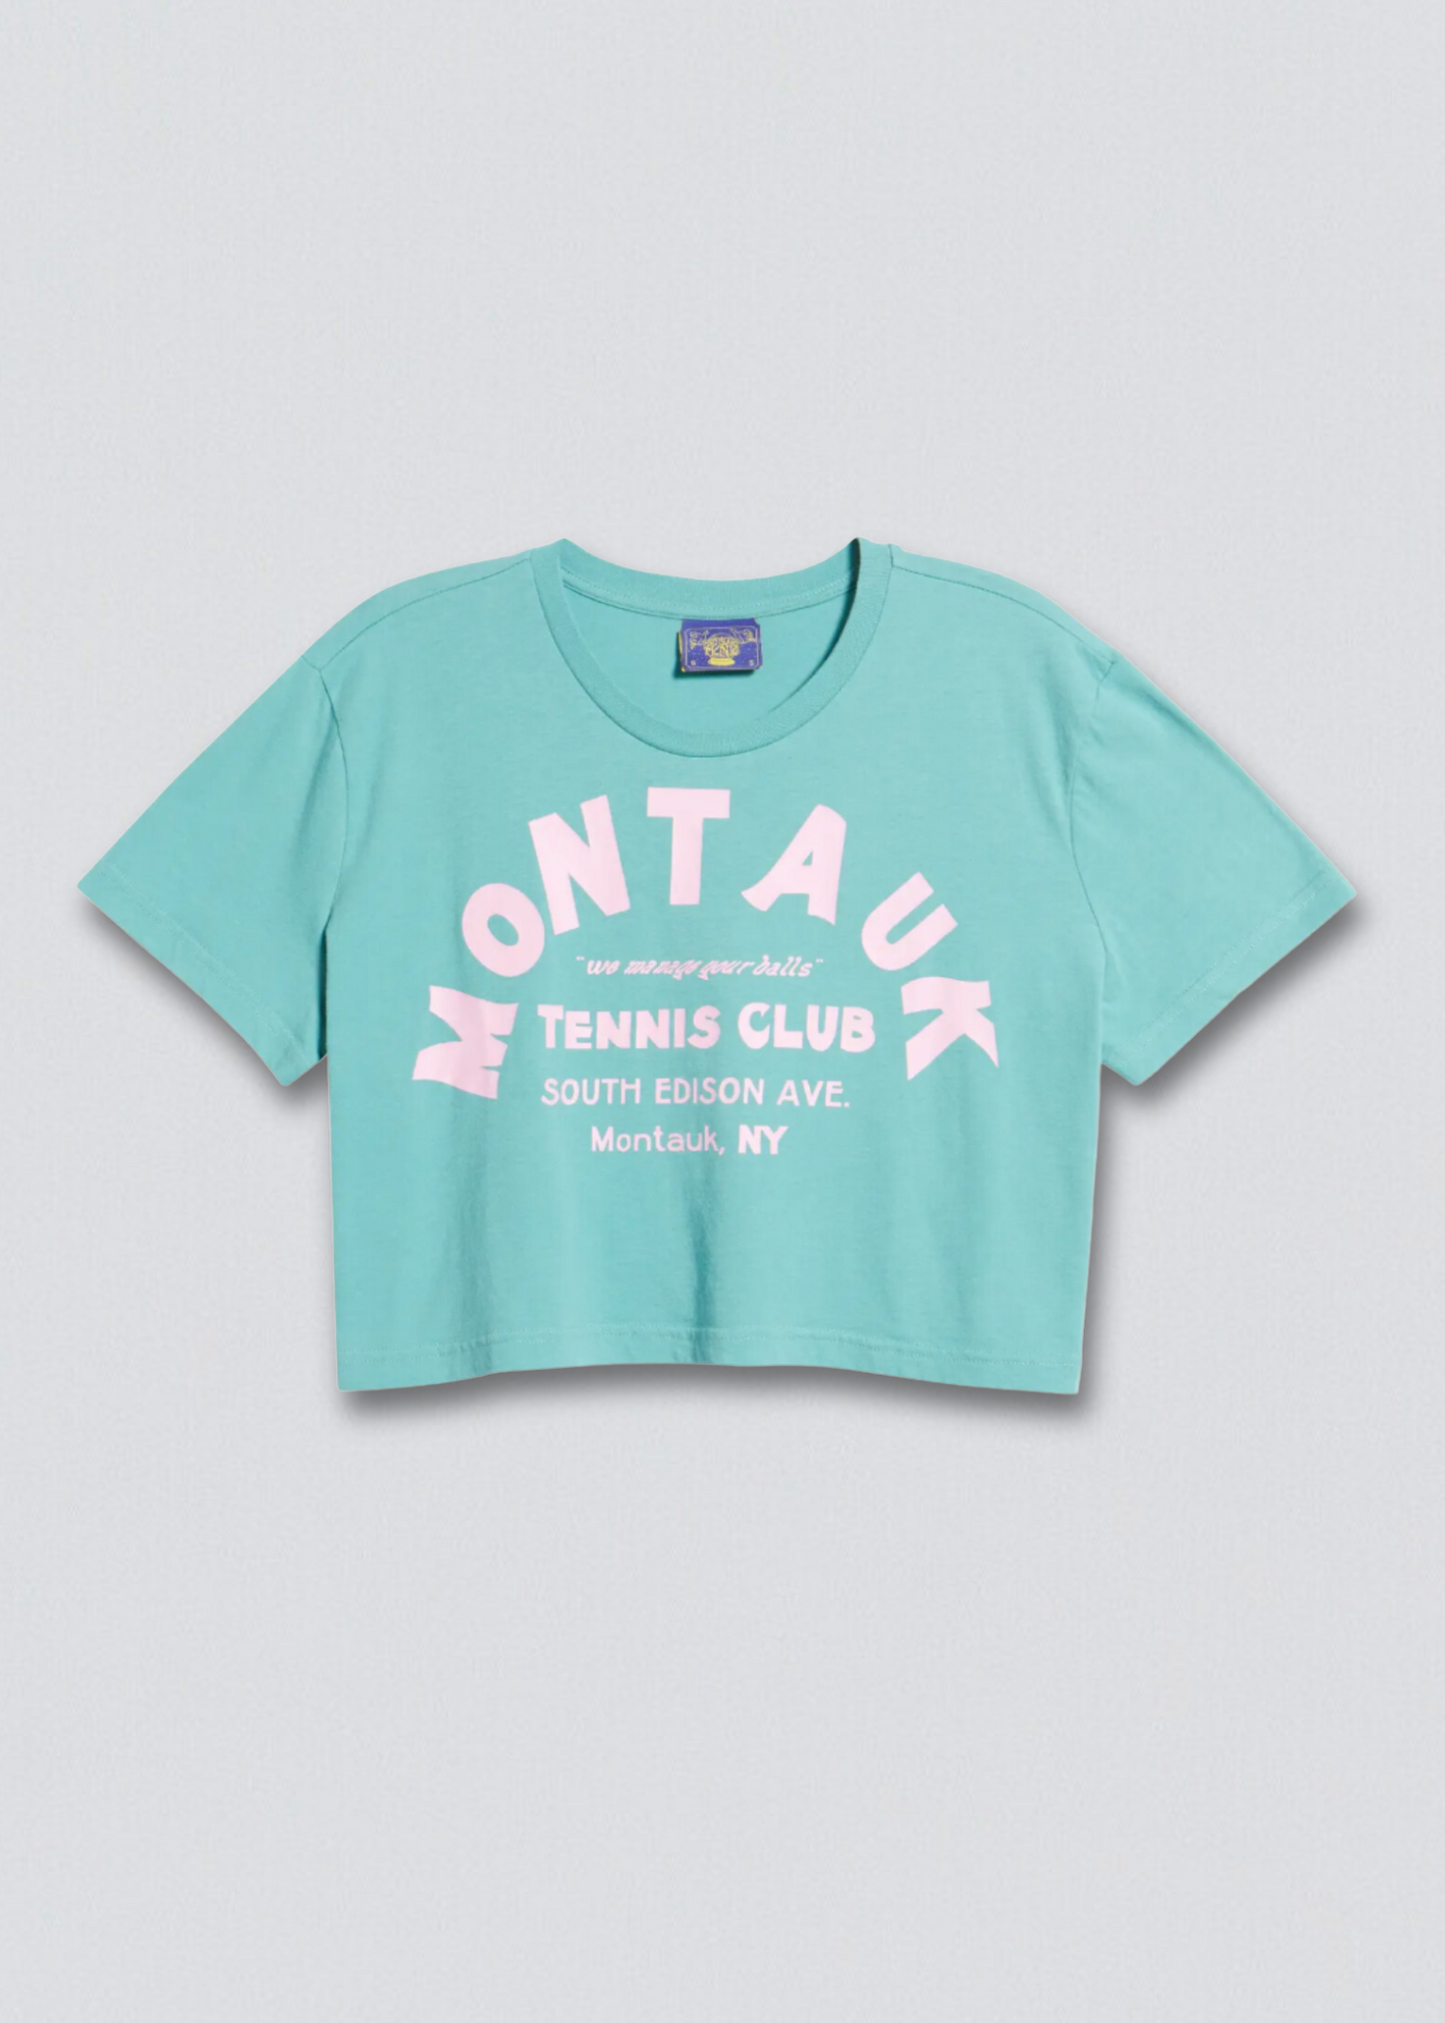 Montauk Tennis Club Crop Top